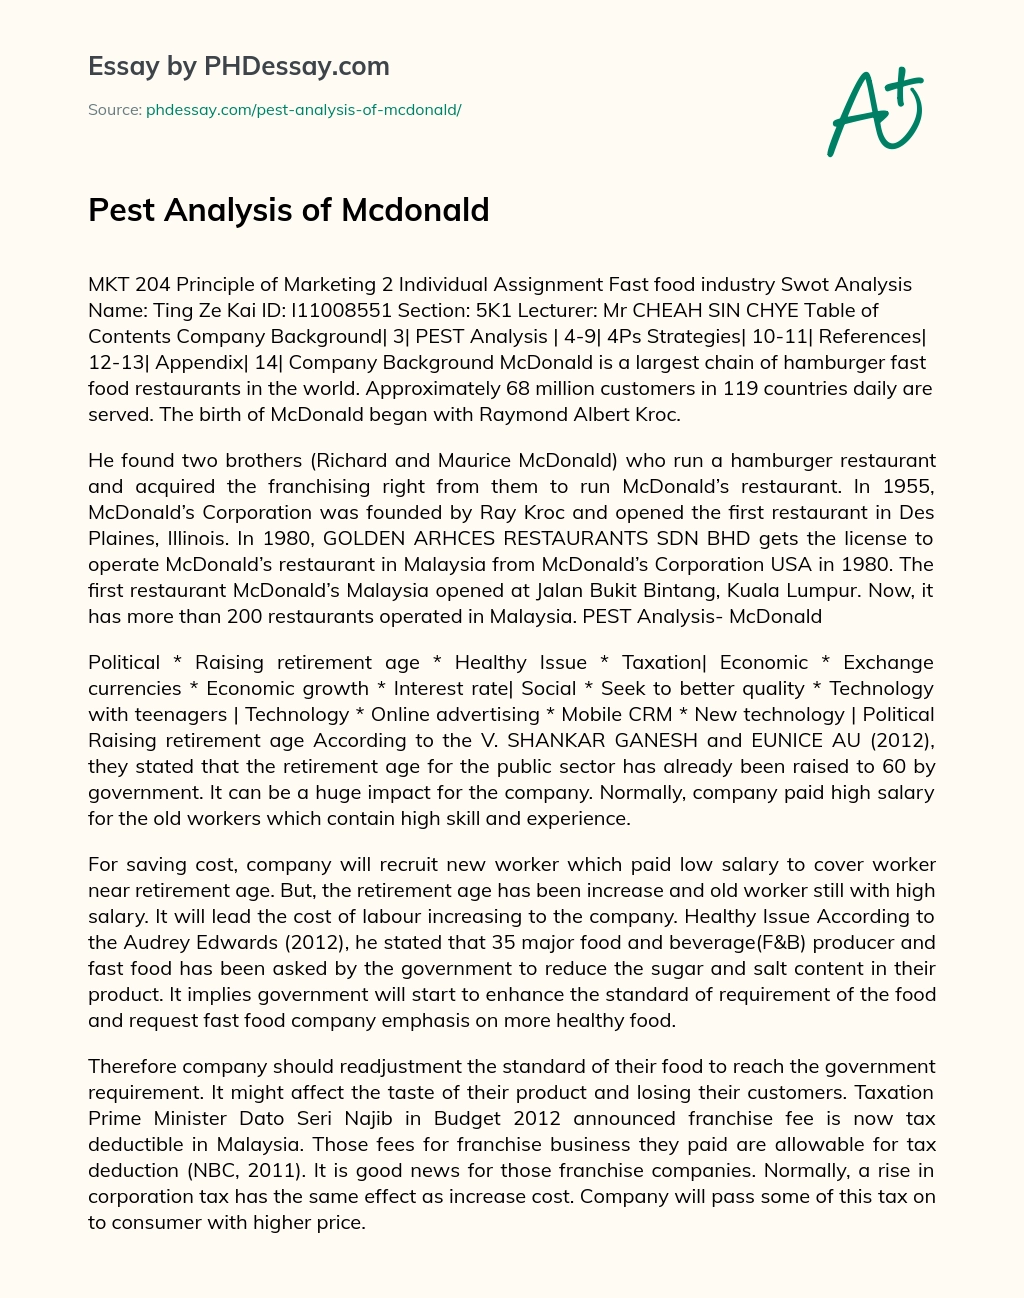 Pest Analysis of Mcdonald essay